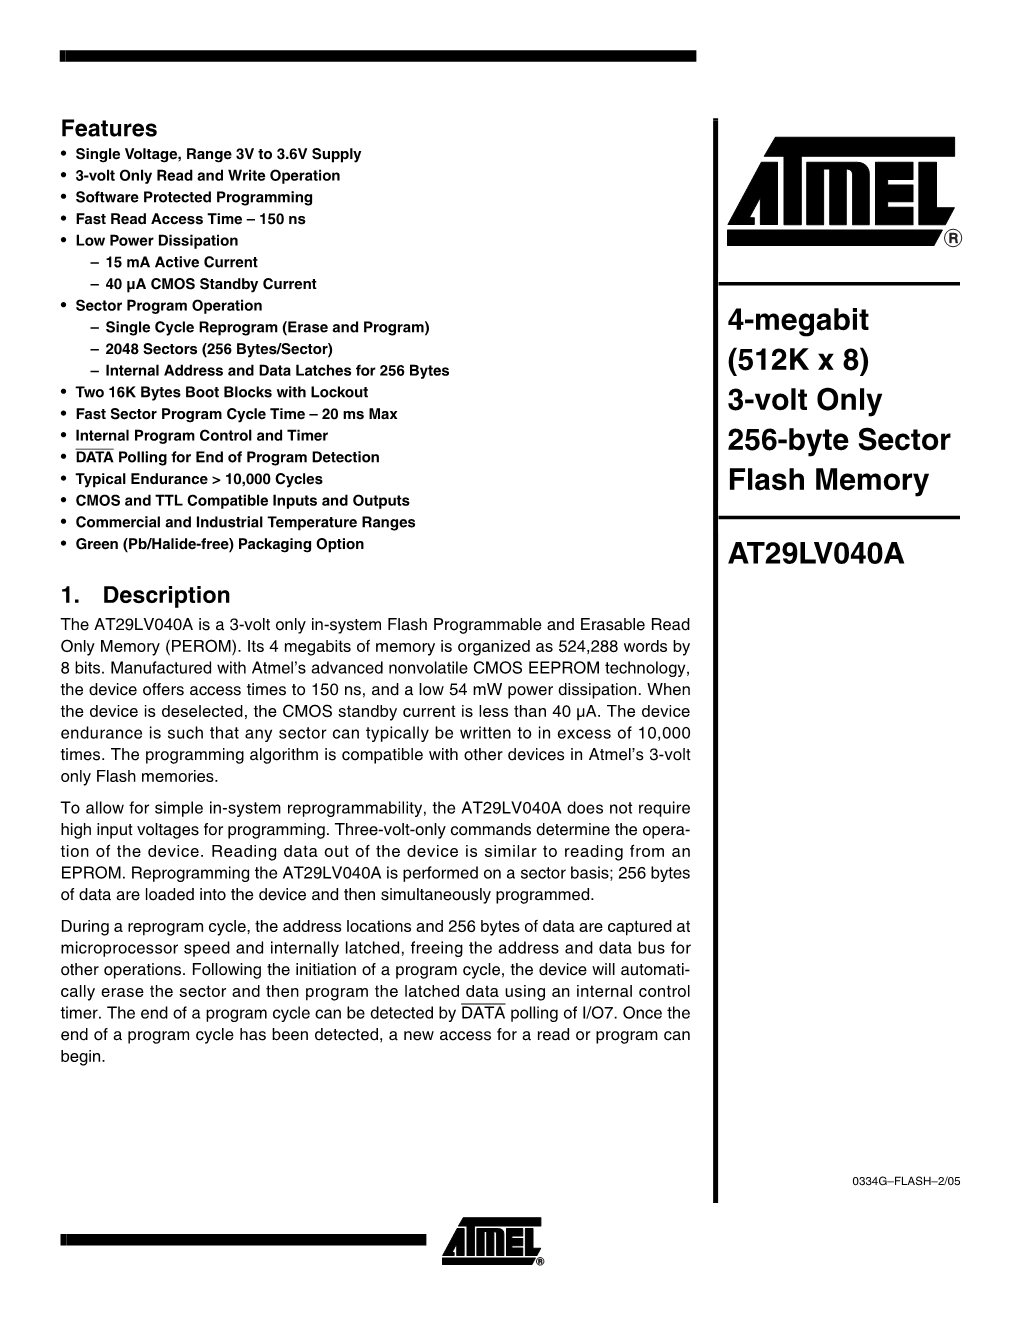 4-Megabit (512K X 8) 3-Volt Only 256-Byte Sector Flash Memory